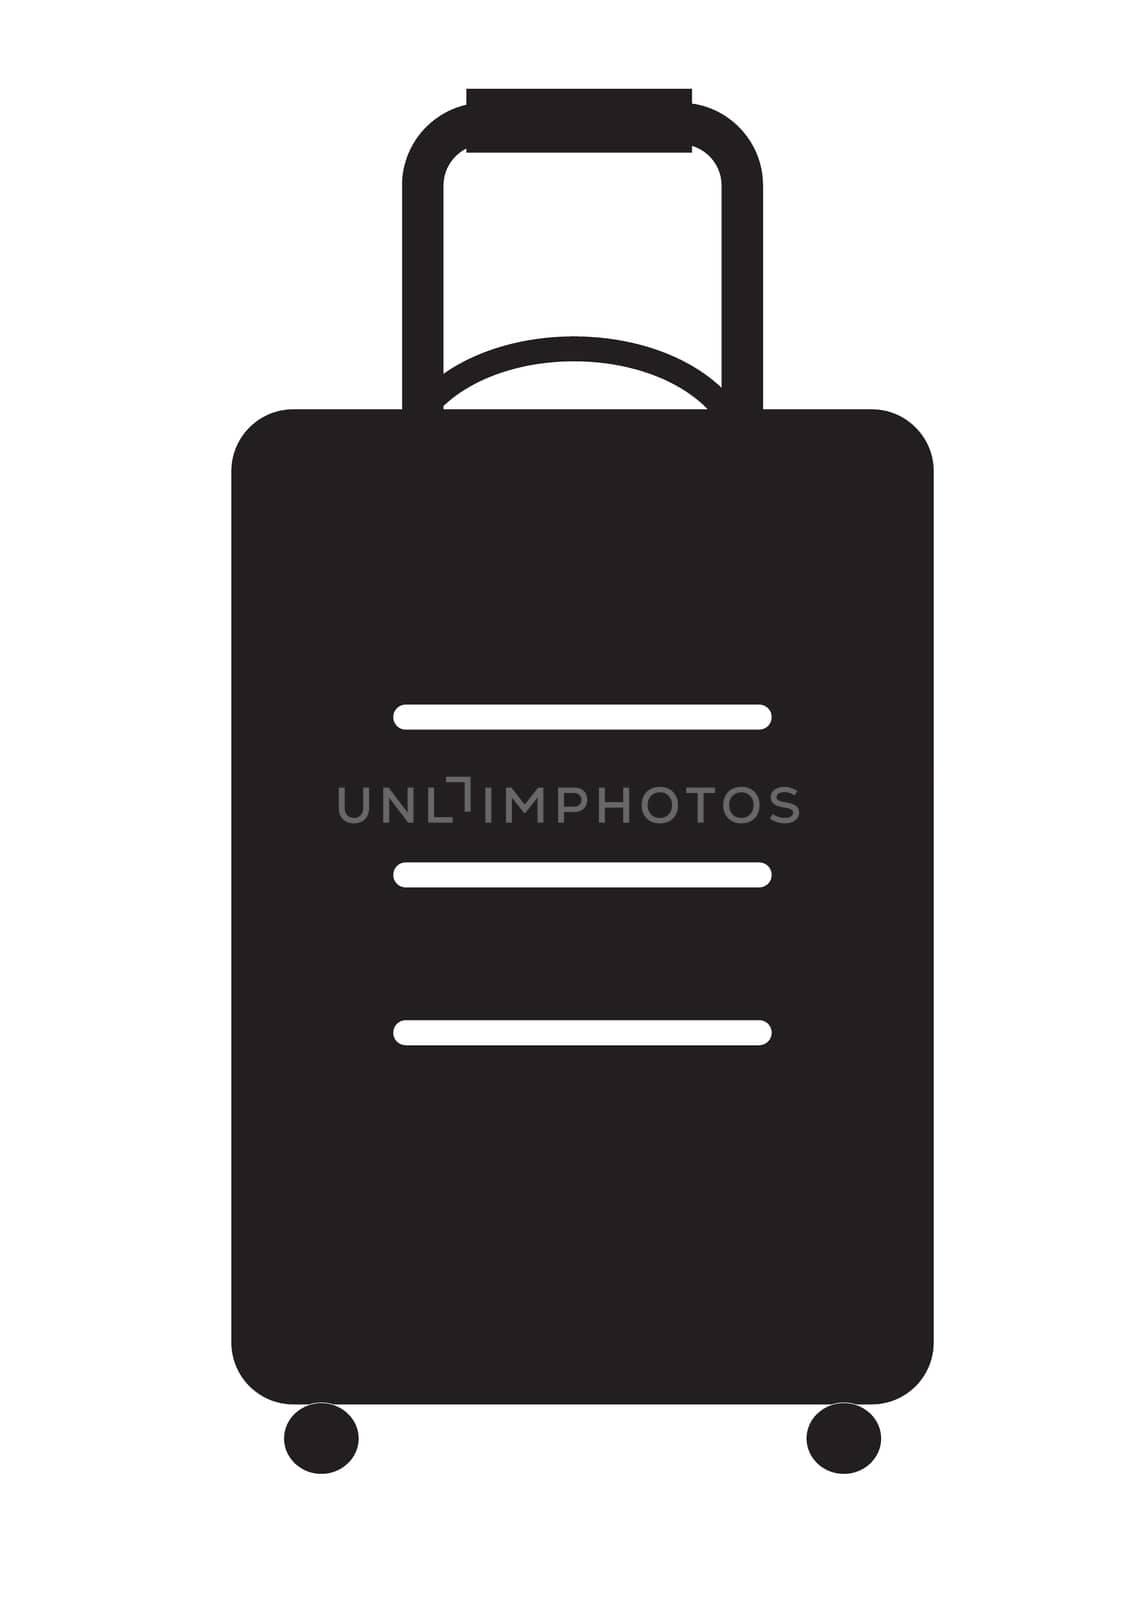 travel bag icon on white background. flat style design. travel bag sign. 